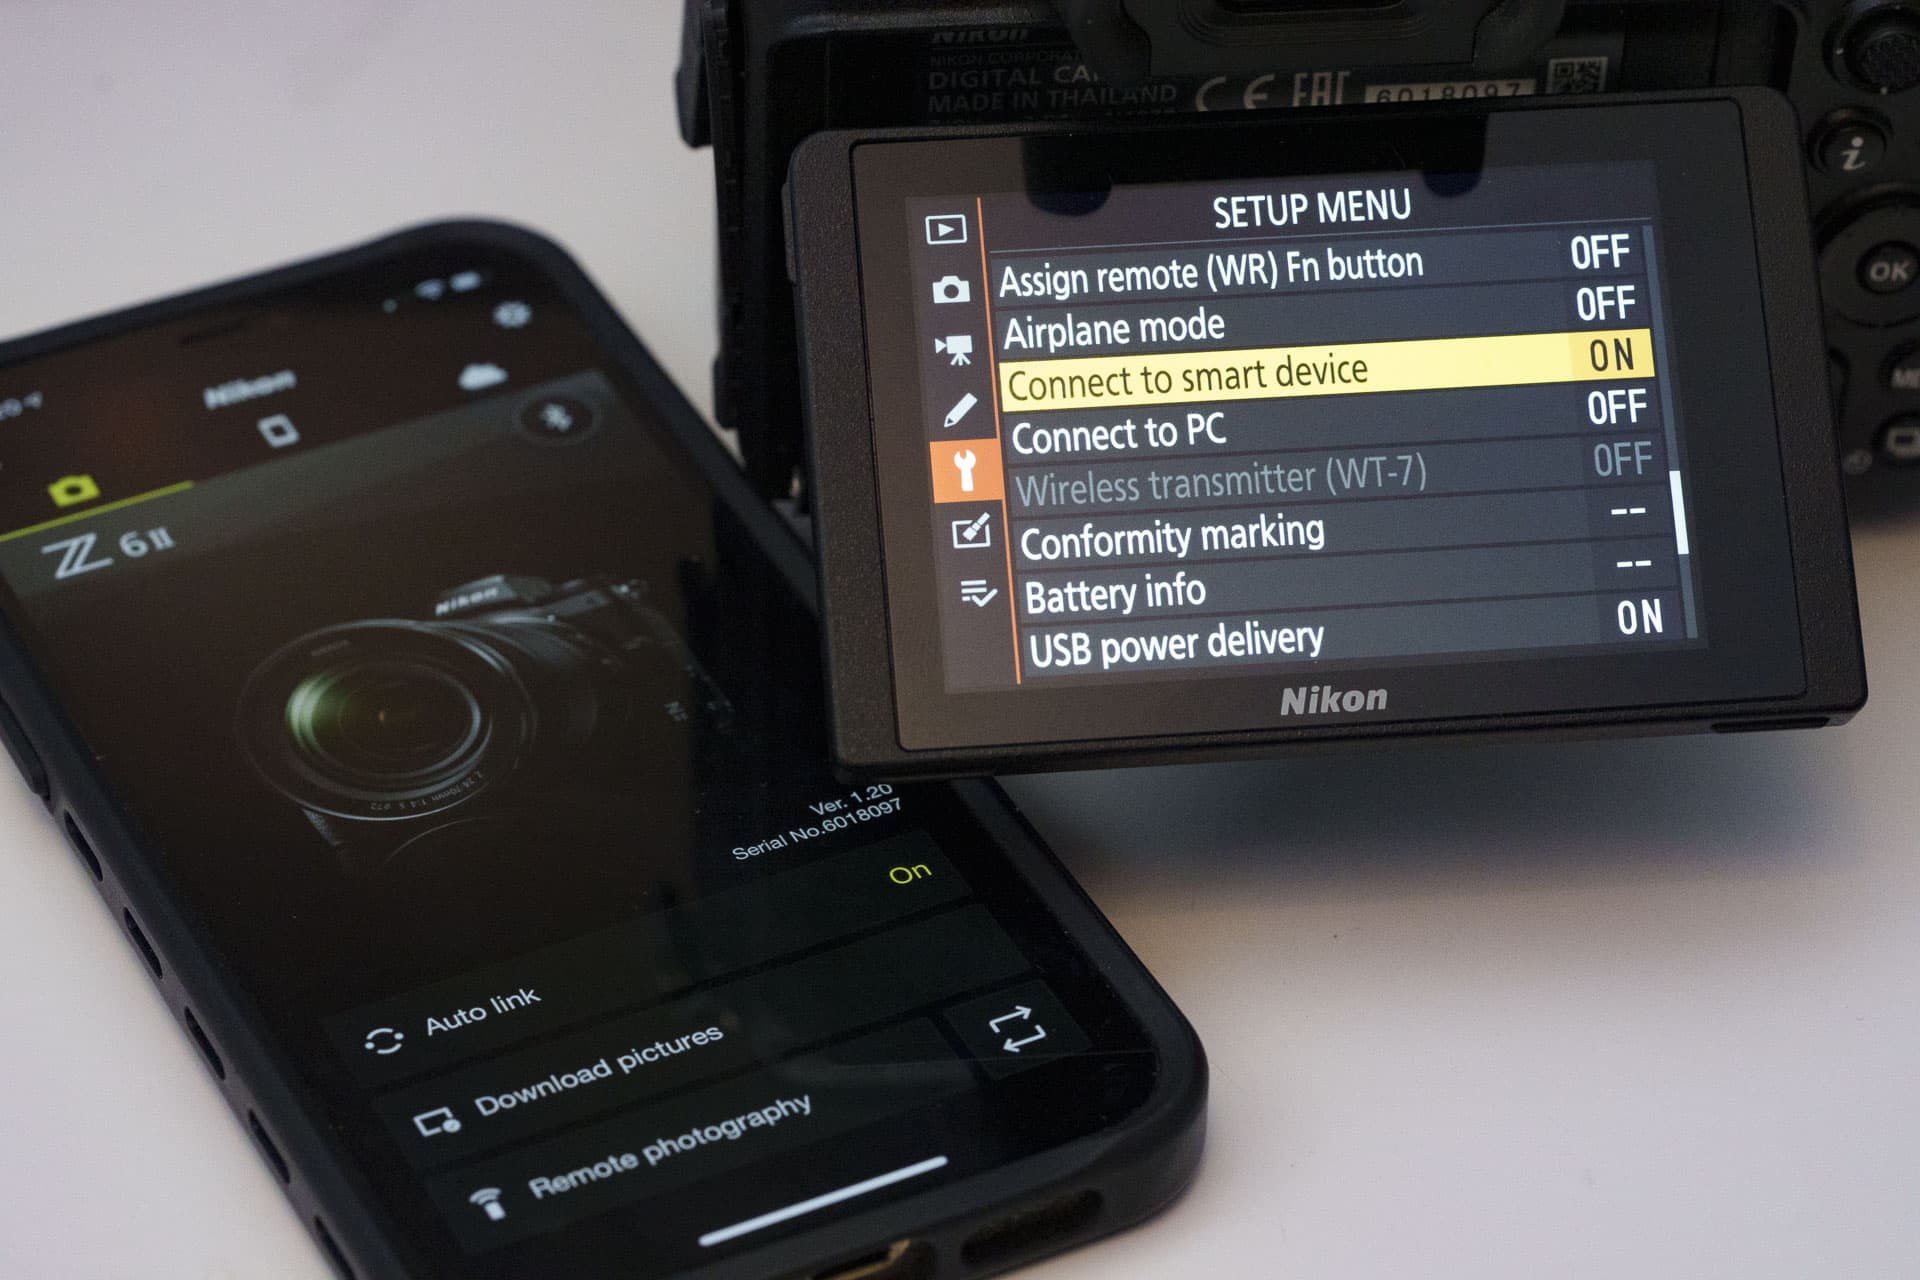 Nikon SnapBridge app and Nikon camera